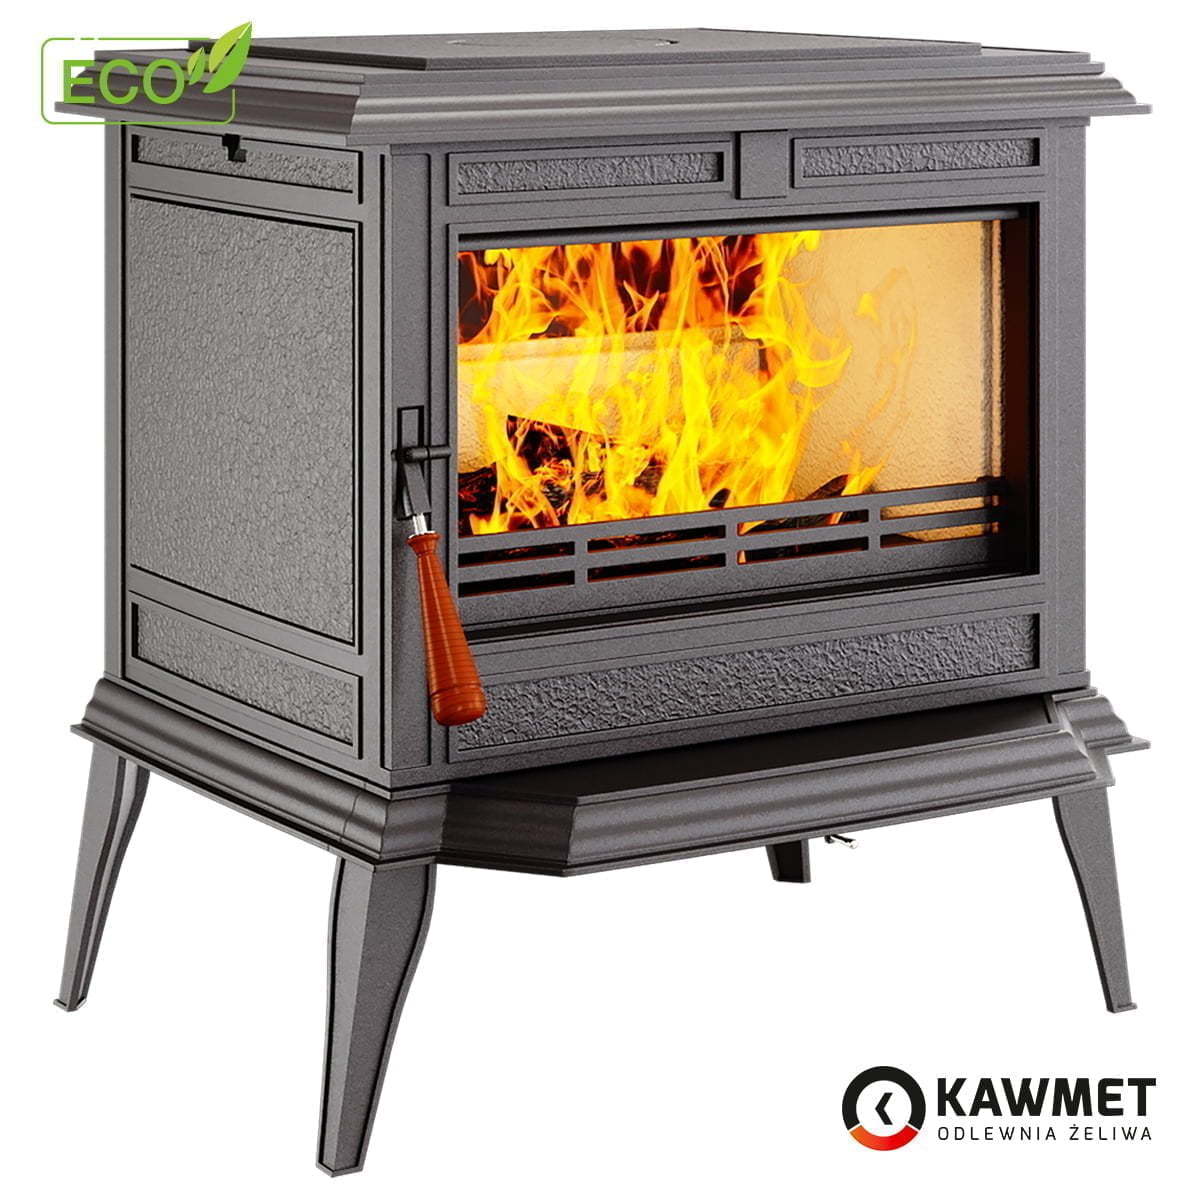 Wood burning stove KAWMET Premium ATHENA S12 ECO (3)